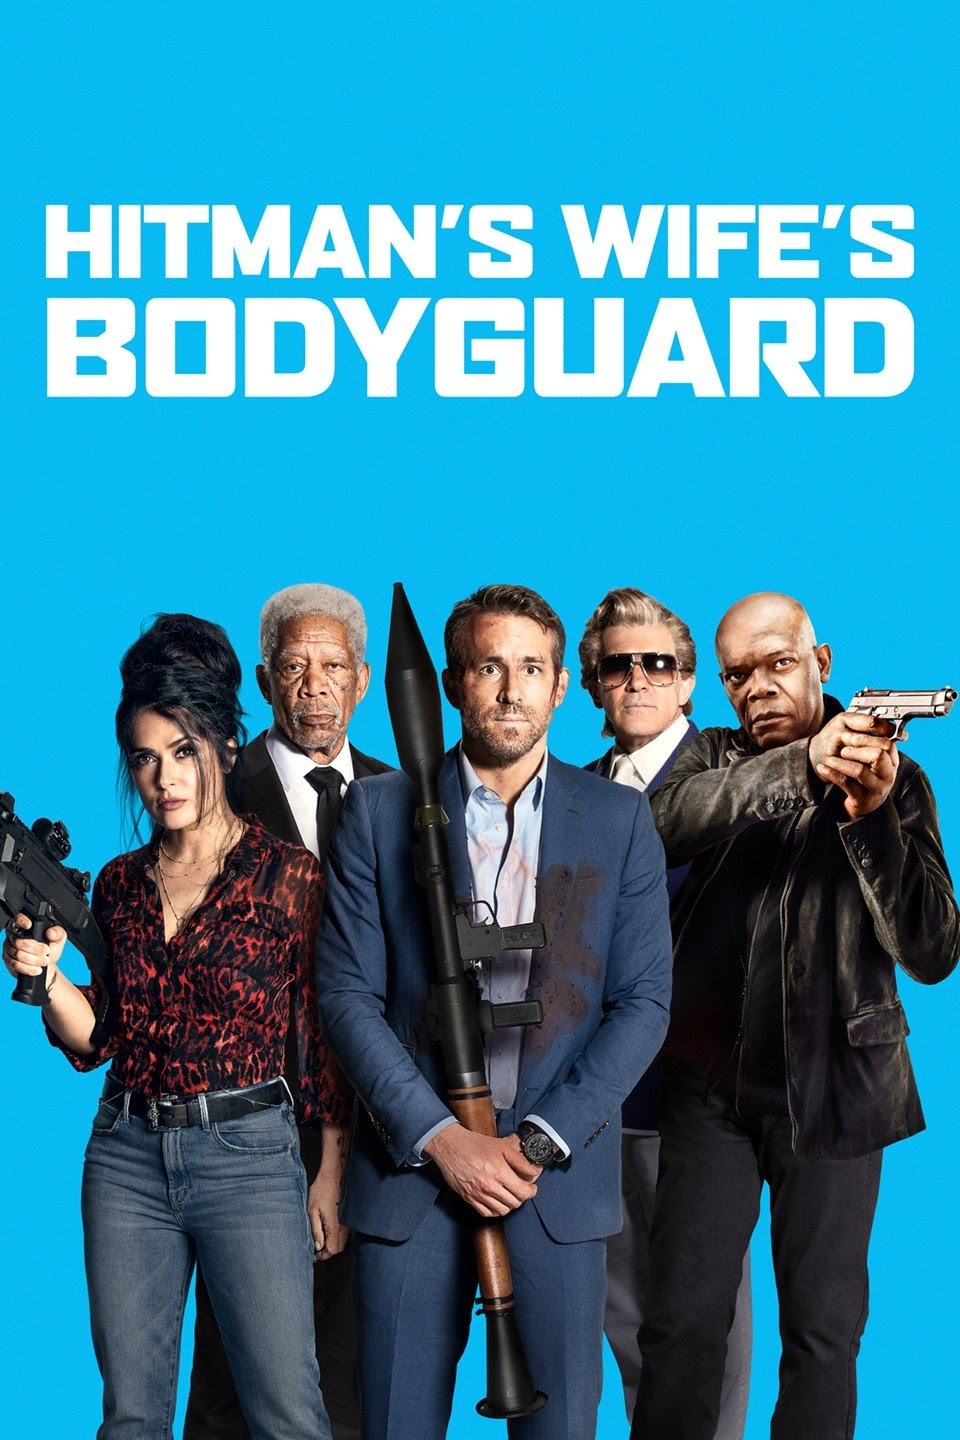 [MINI Super-HQ] The Hitman’s Wife’s Bodyguard (2021) แสบ ซ่าส์ แบบว่าบอดี้การ์ด 2 [1080p] [พากย์ไทย 5.1 + เสียงอังกฤษ DTS] [บรรยายไทย + อังกฤษ] [เสียงไทย + ซับไทย] [DOSYAUPLOAD]